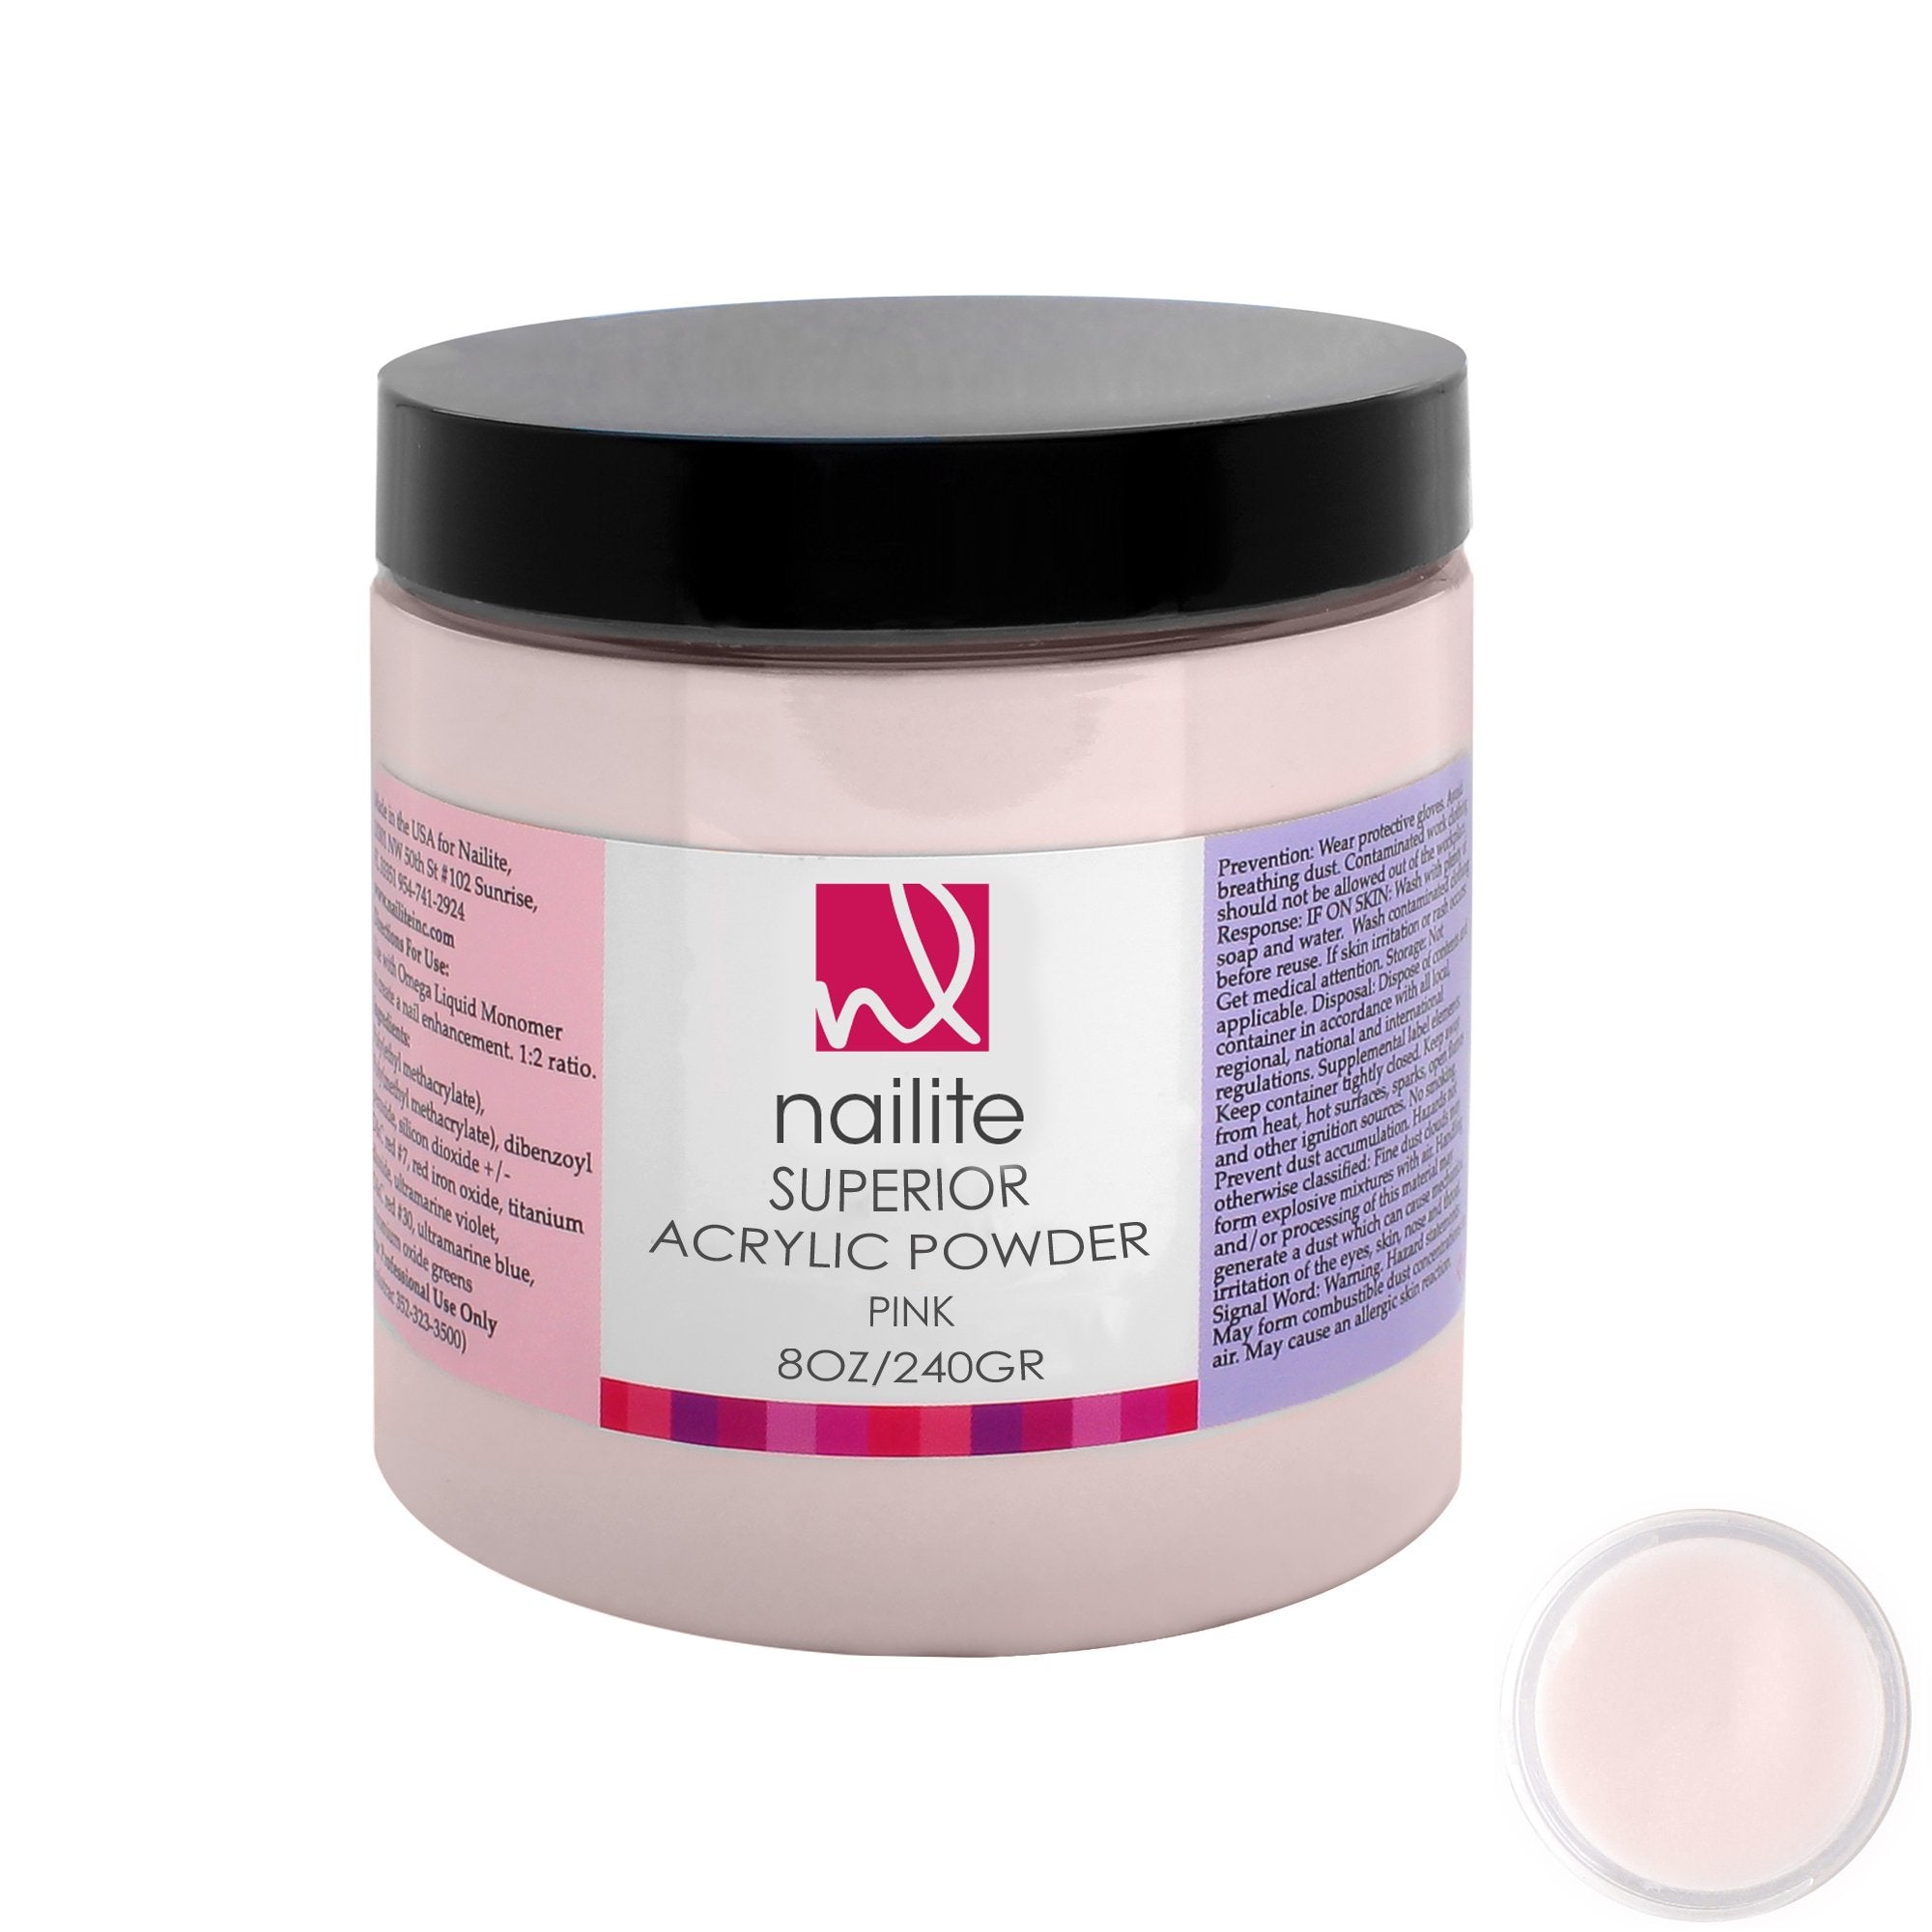 superior_acrylicpowder_pink_8oz_f6a9d340-e60c-4b4a-8ae8-3ba7f3f76966.jpg